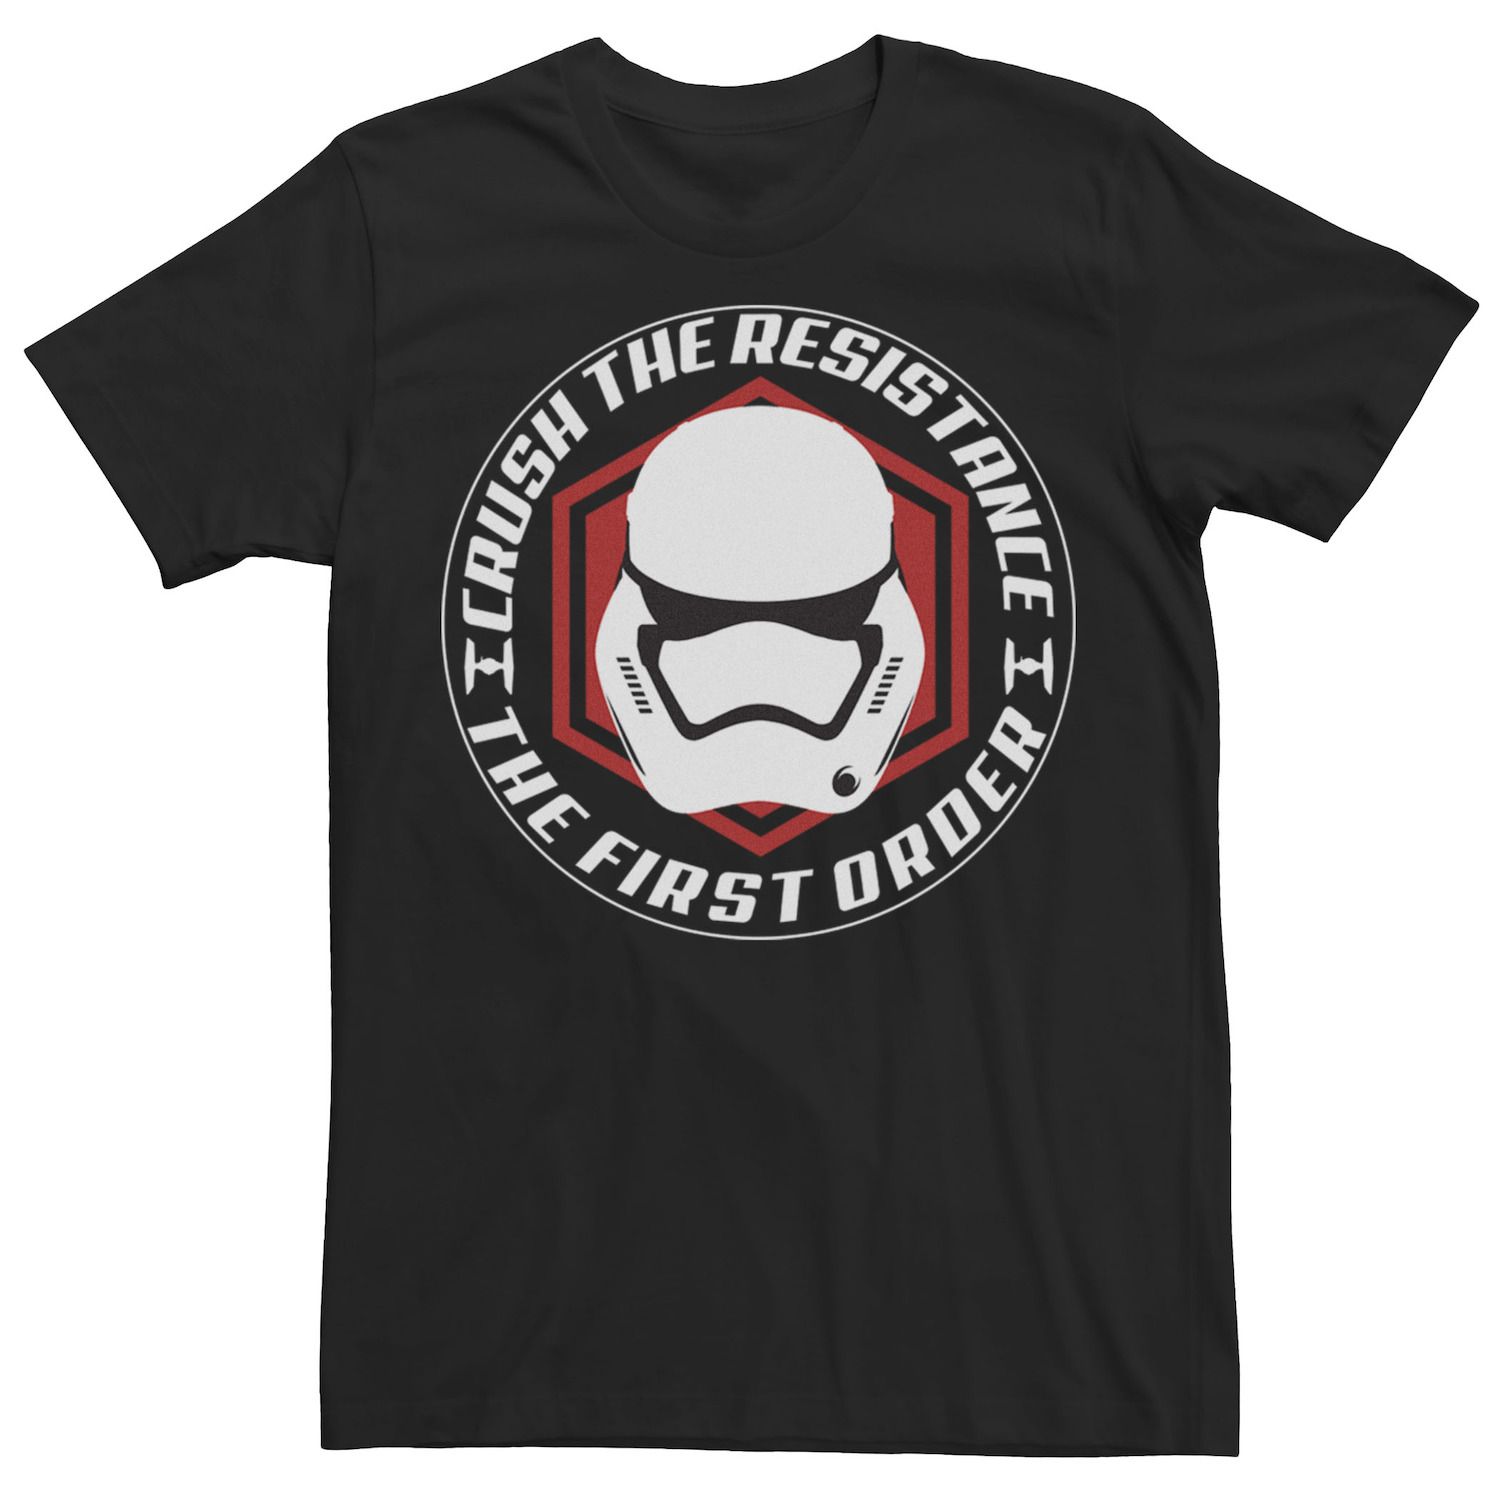 Мужская футболка The Force Awakens Crush The Resistance Star Wars foster alan dean star wars the force awakens